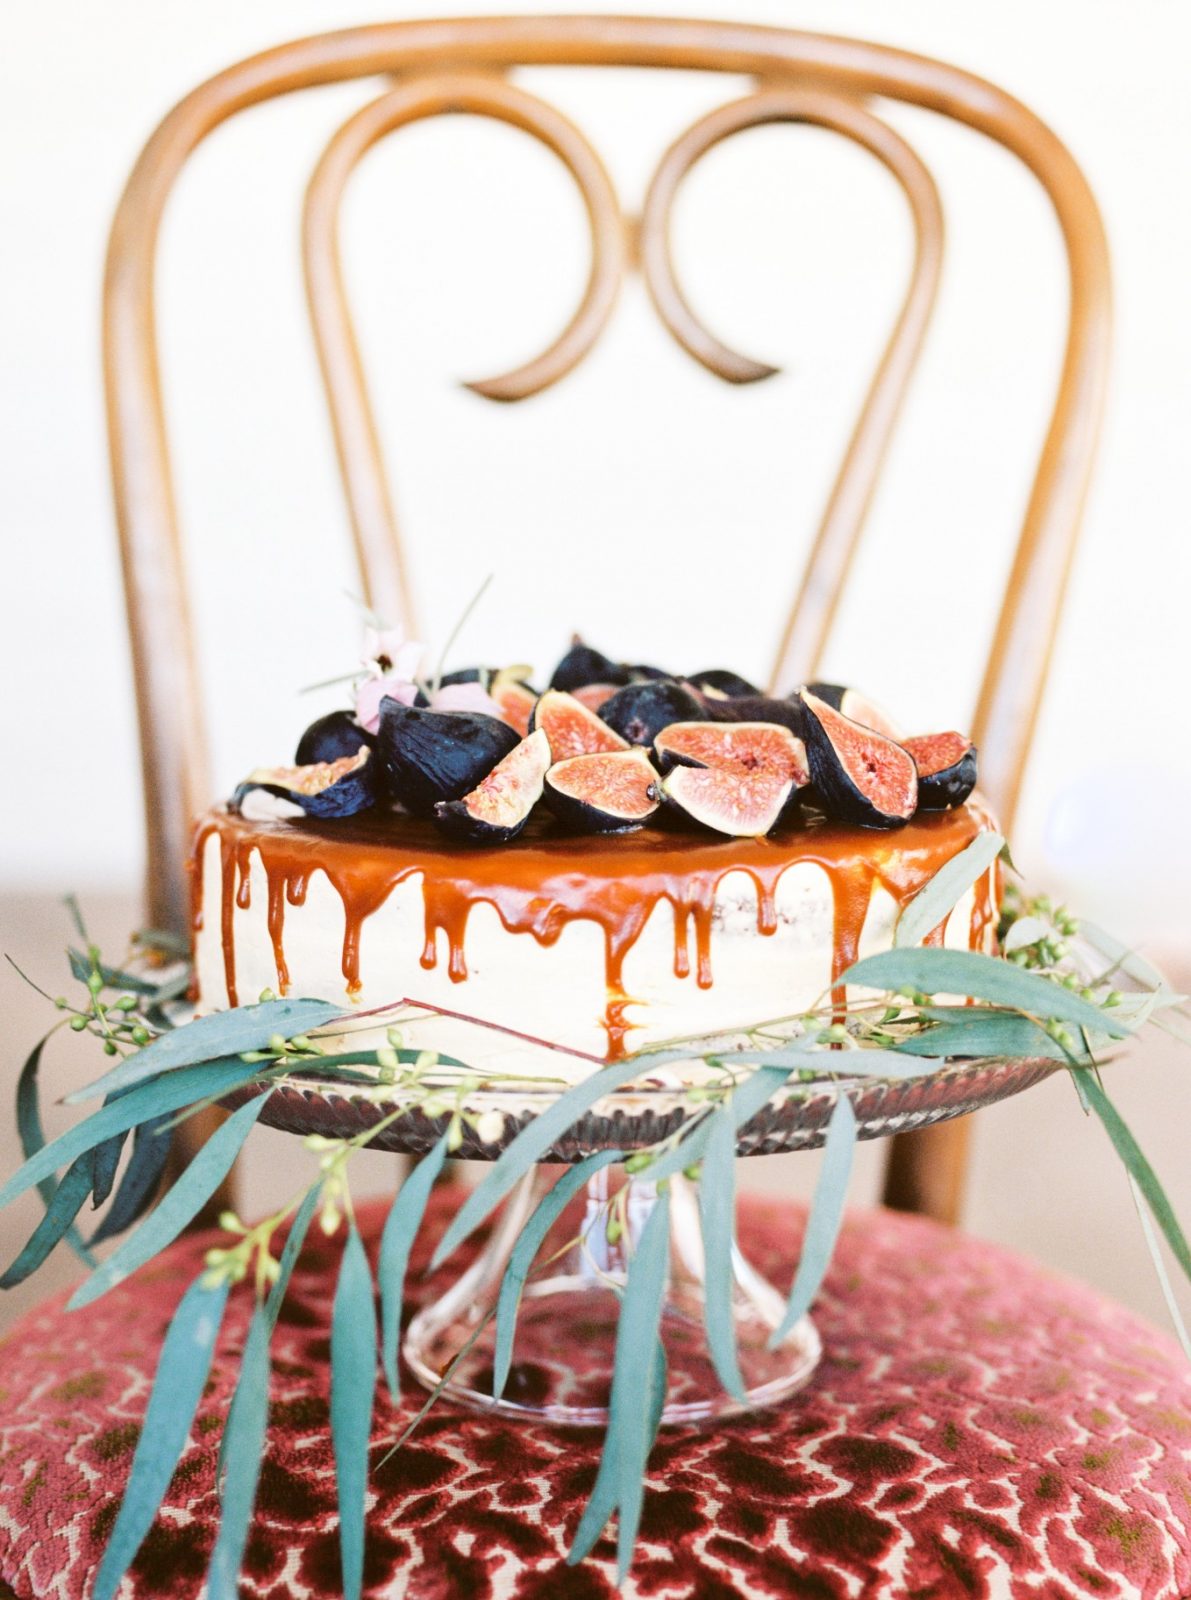 huntsville-alabama-wedding-cake-artist